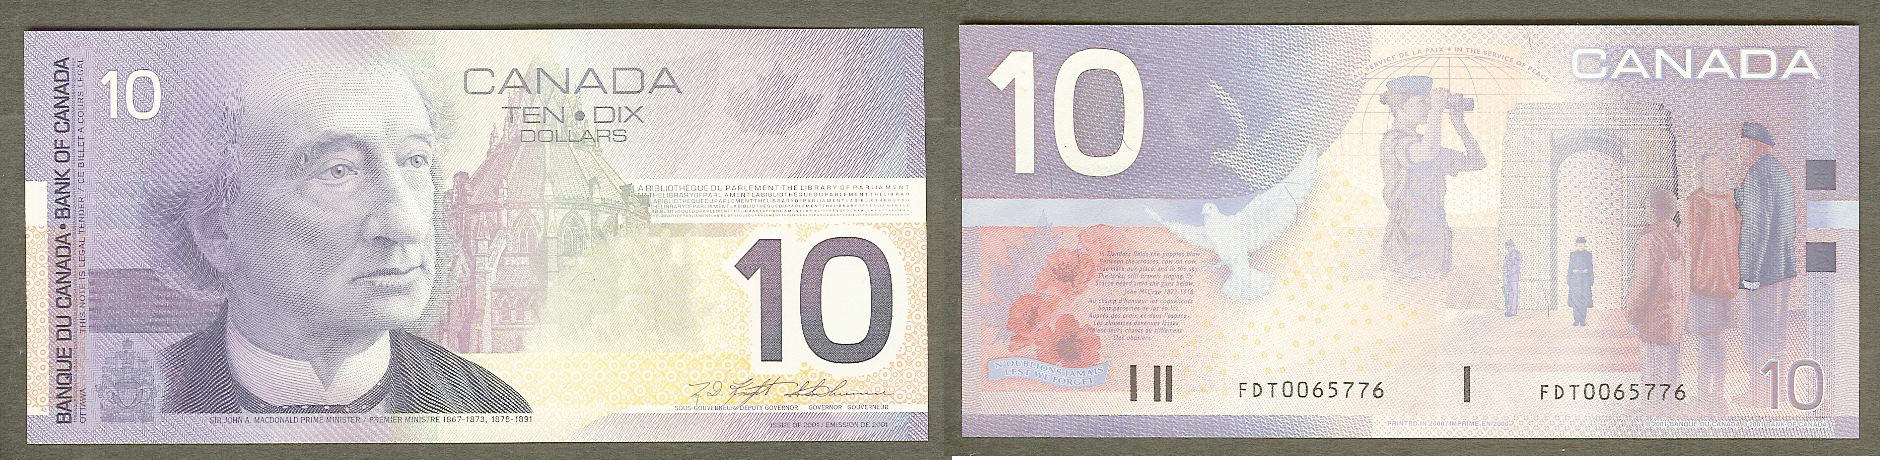 Canada 10 Dollars 2001 NEUF